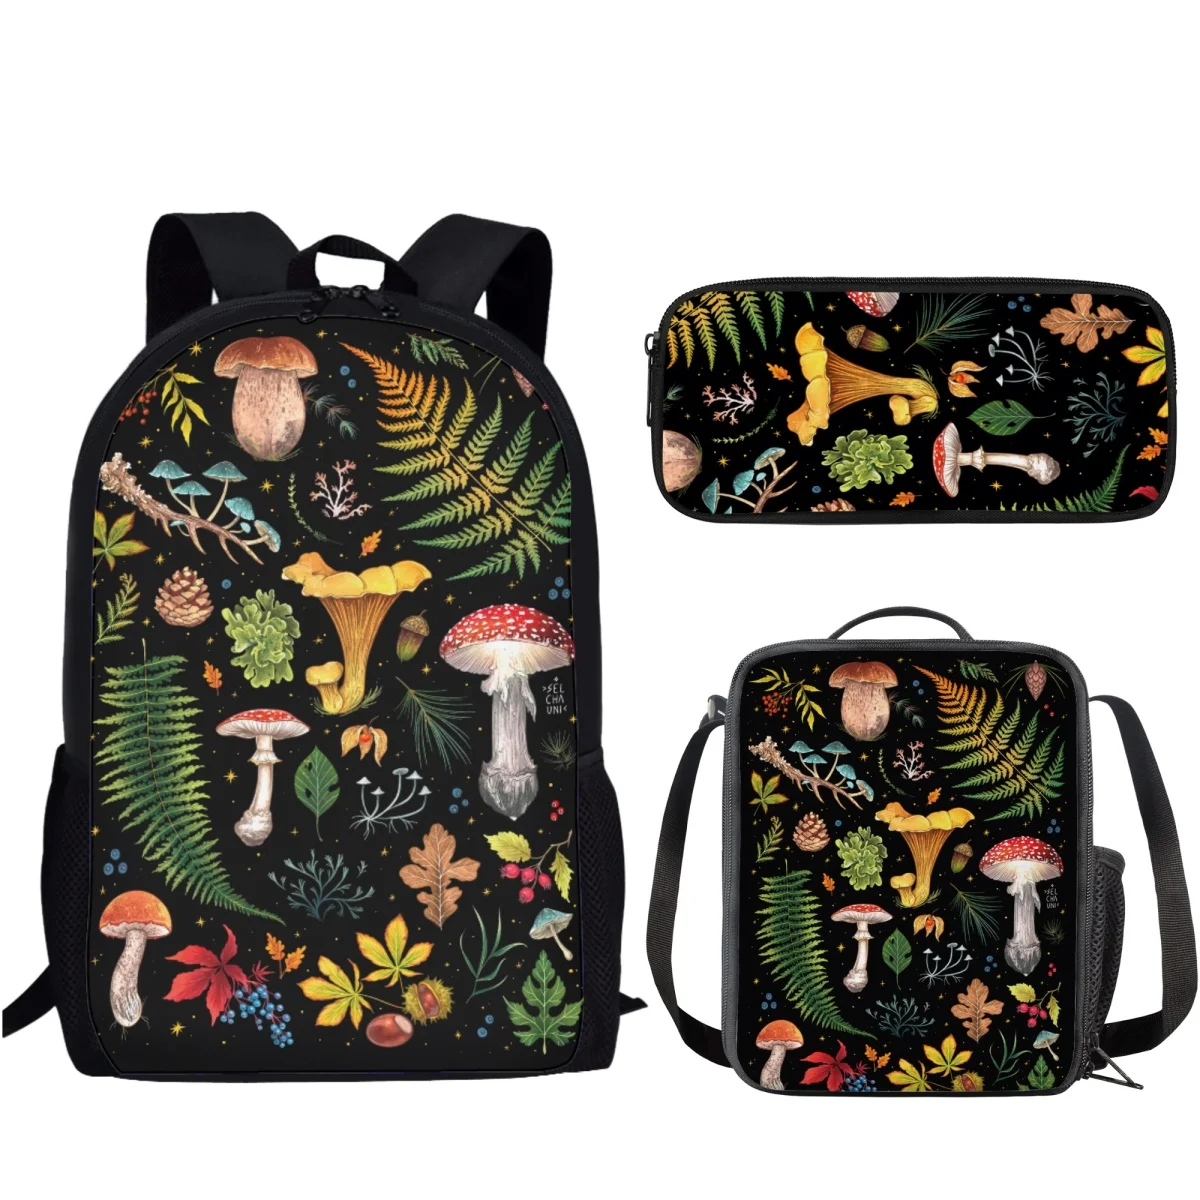 mushroom-pattern-fashion-school-bags-for-kids-girls-boys-3pcs-set-casual-fashion-children-book-bags-with-lunch-box-pencil-bags